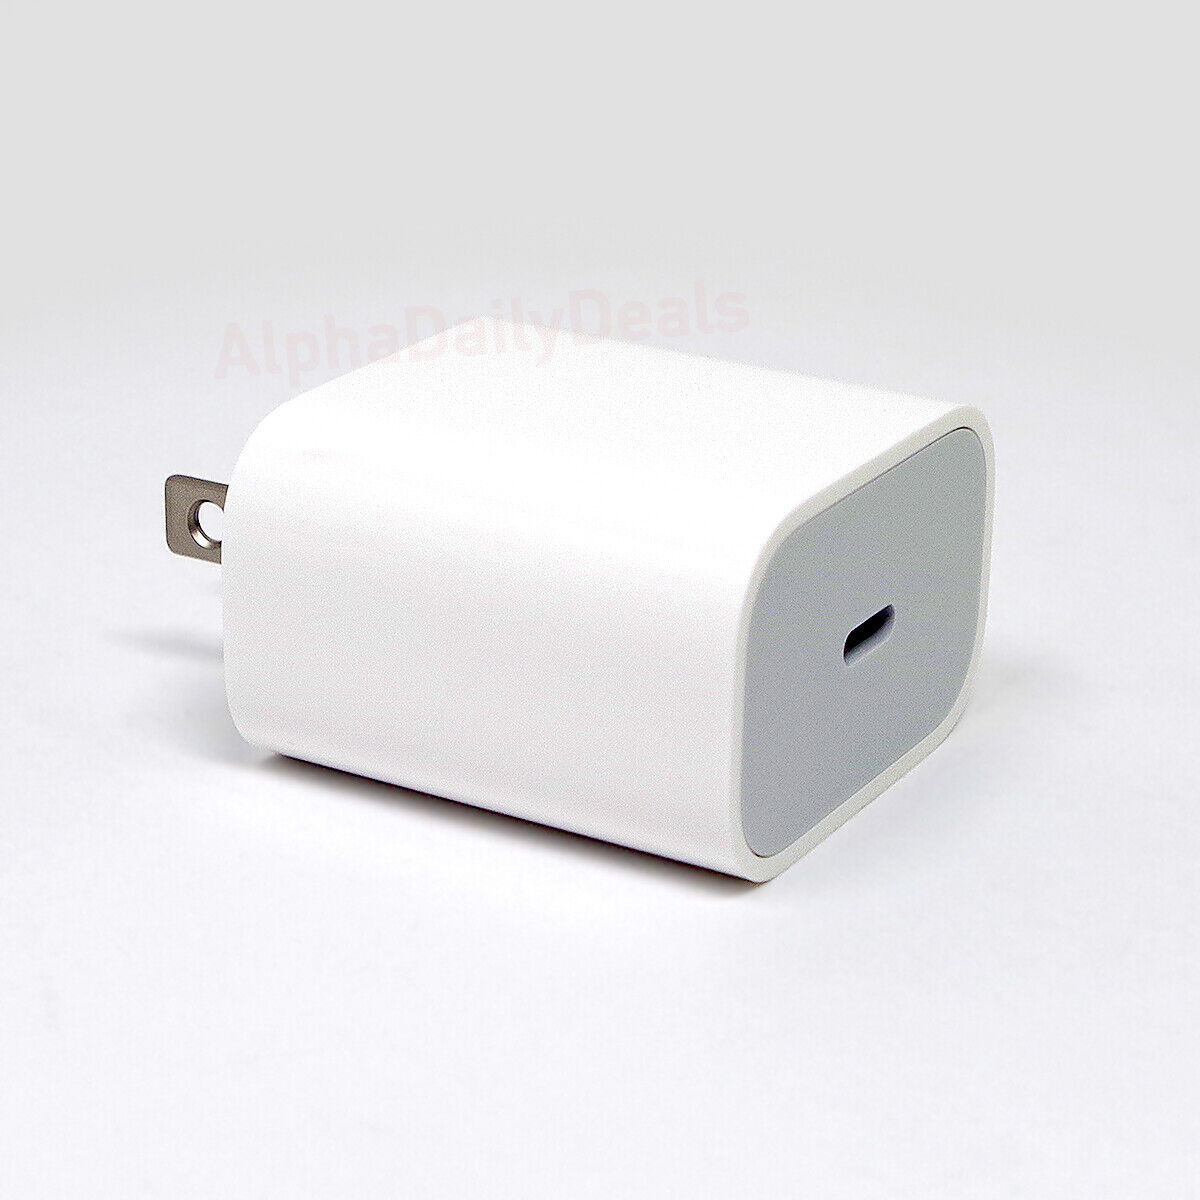 Apple MU7T2LL/A 18W USB-C Power Adapter - White for sale online | eBay